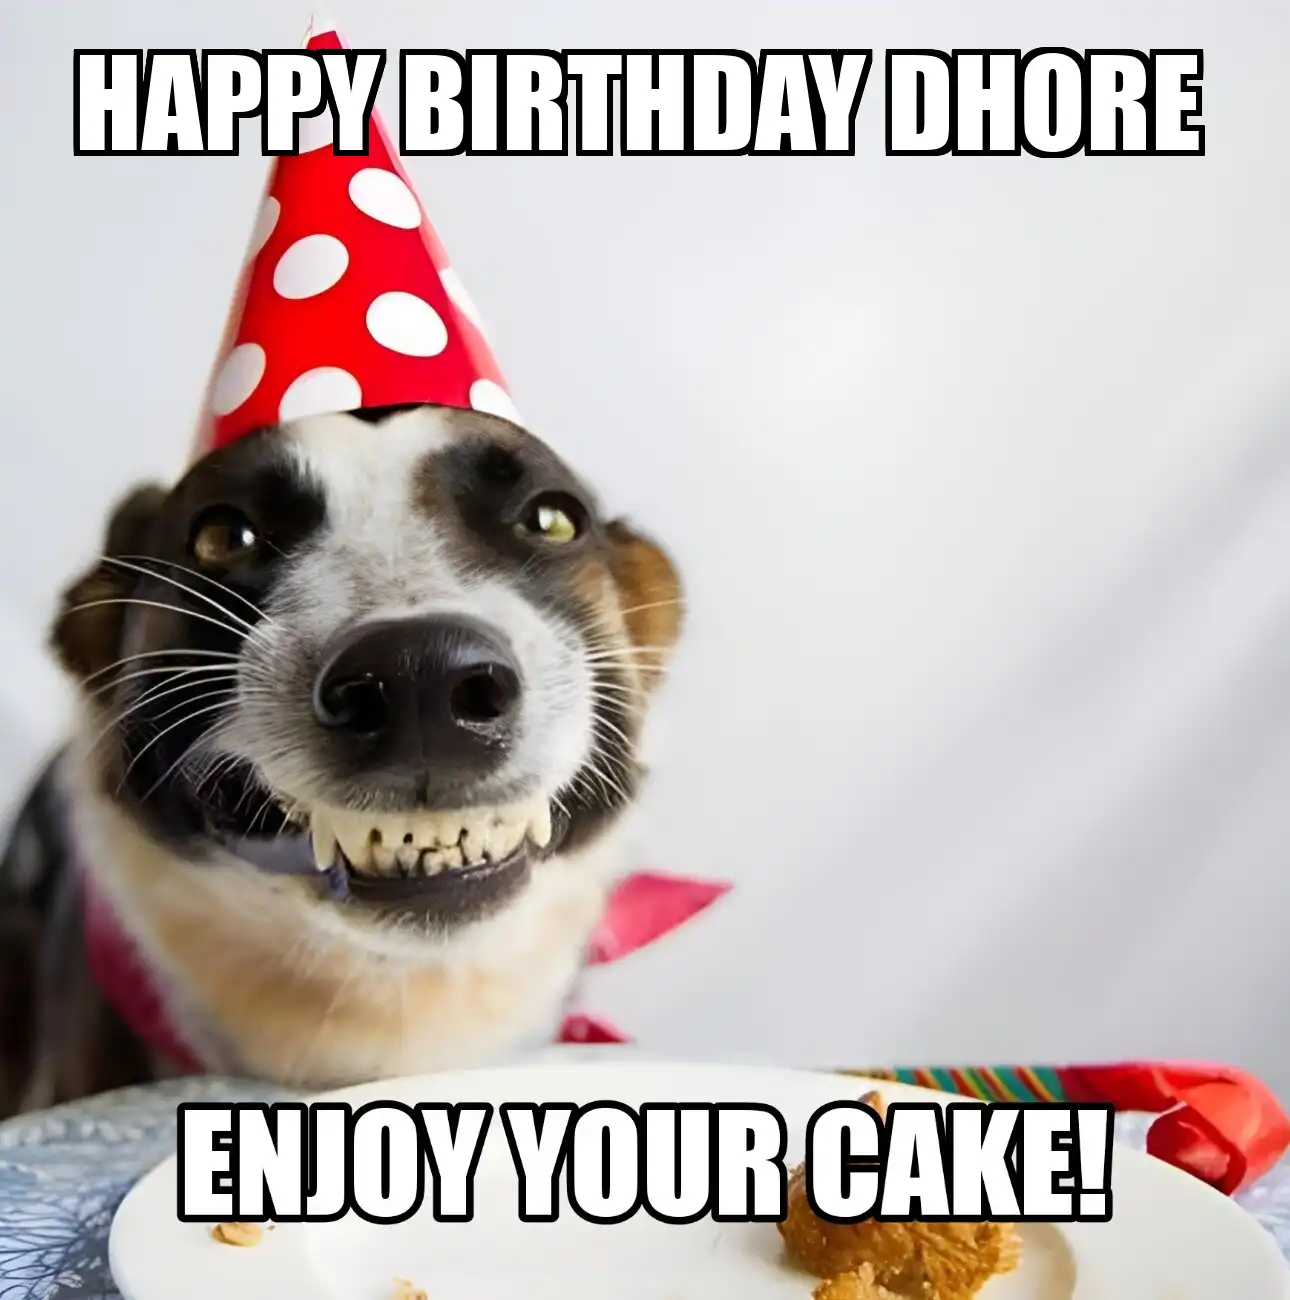 Happy Birthday Dhore Enjoy Your Cake Dog Meme